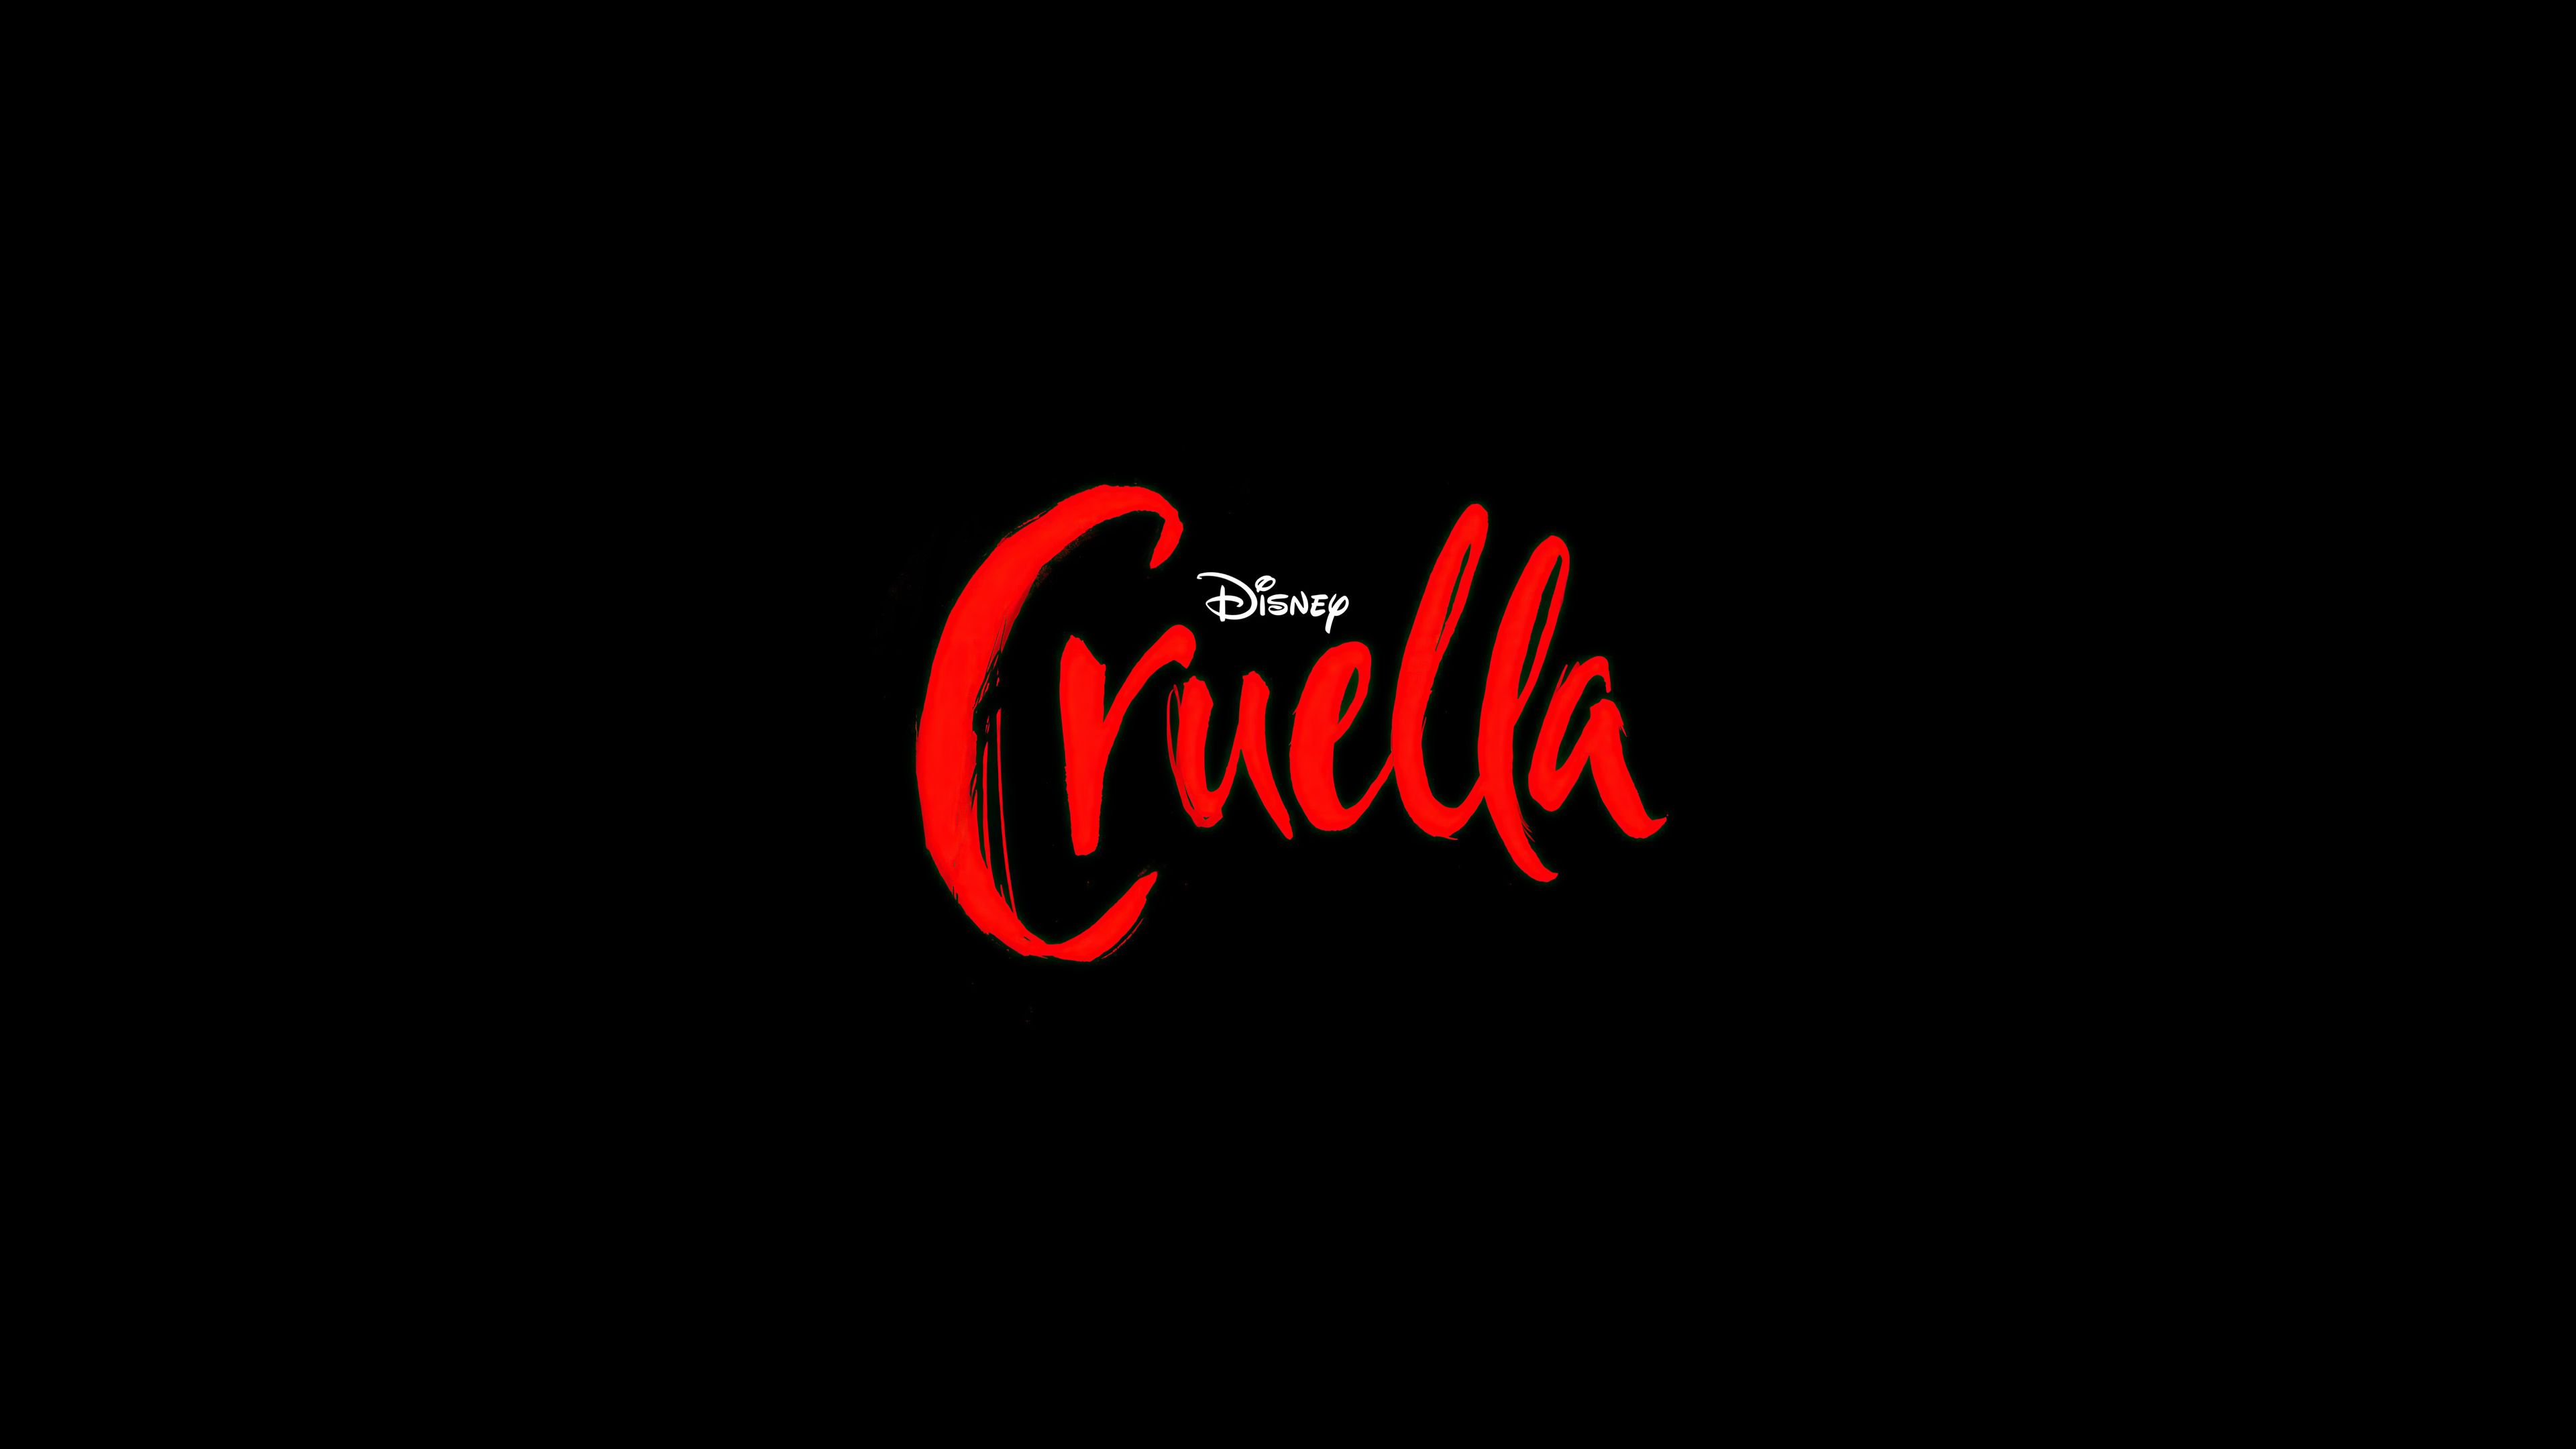 Cruella Movie Logo 4k, HD Movies, 4k Wallpaper, Image, Background, Photo and Picture